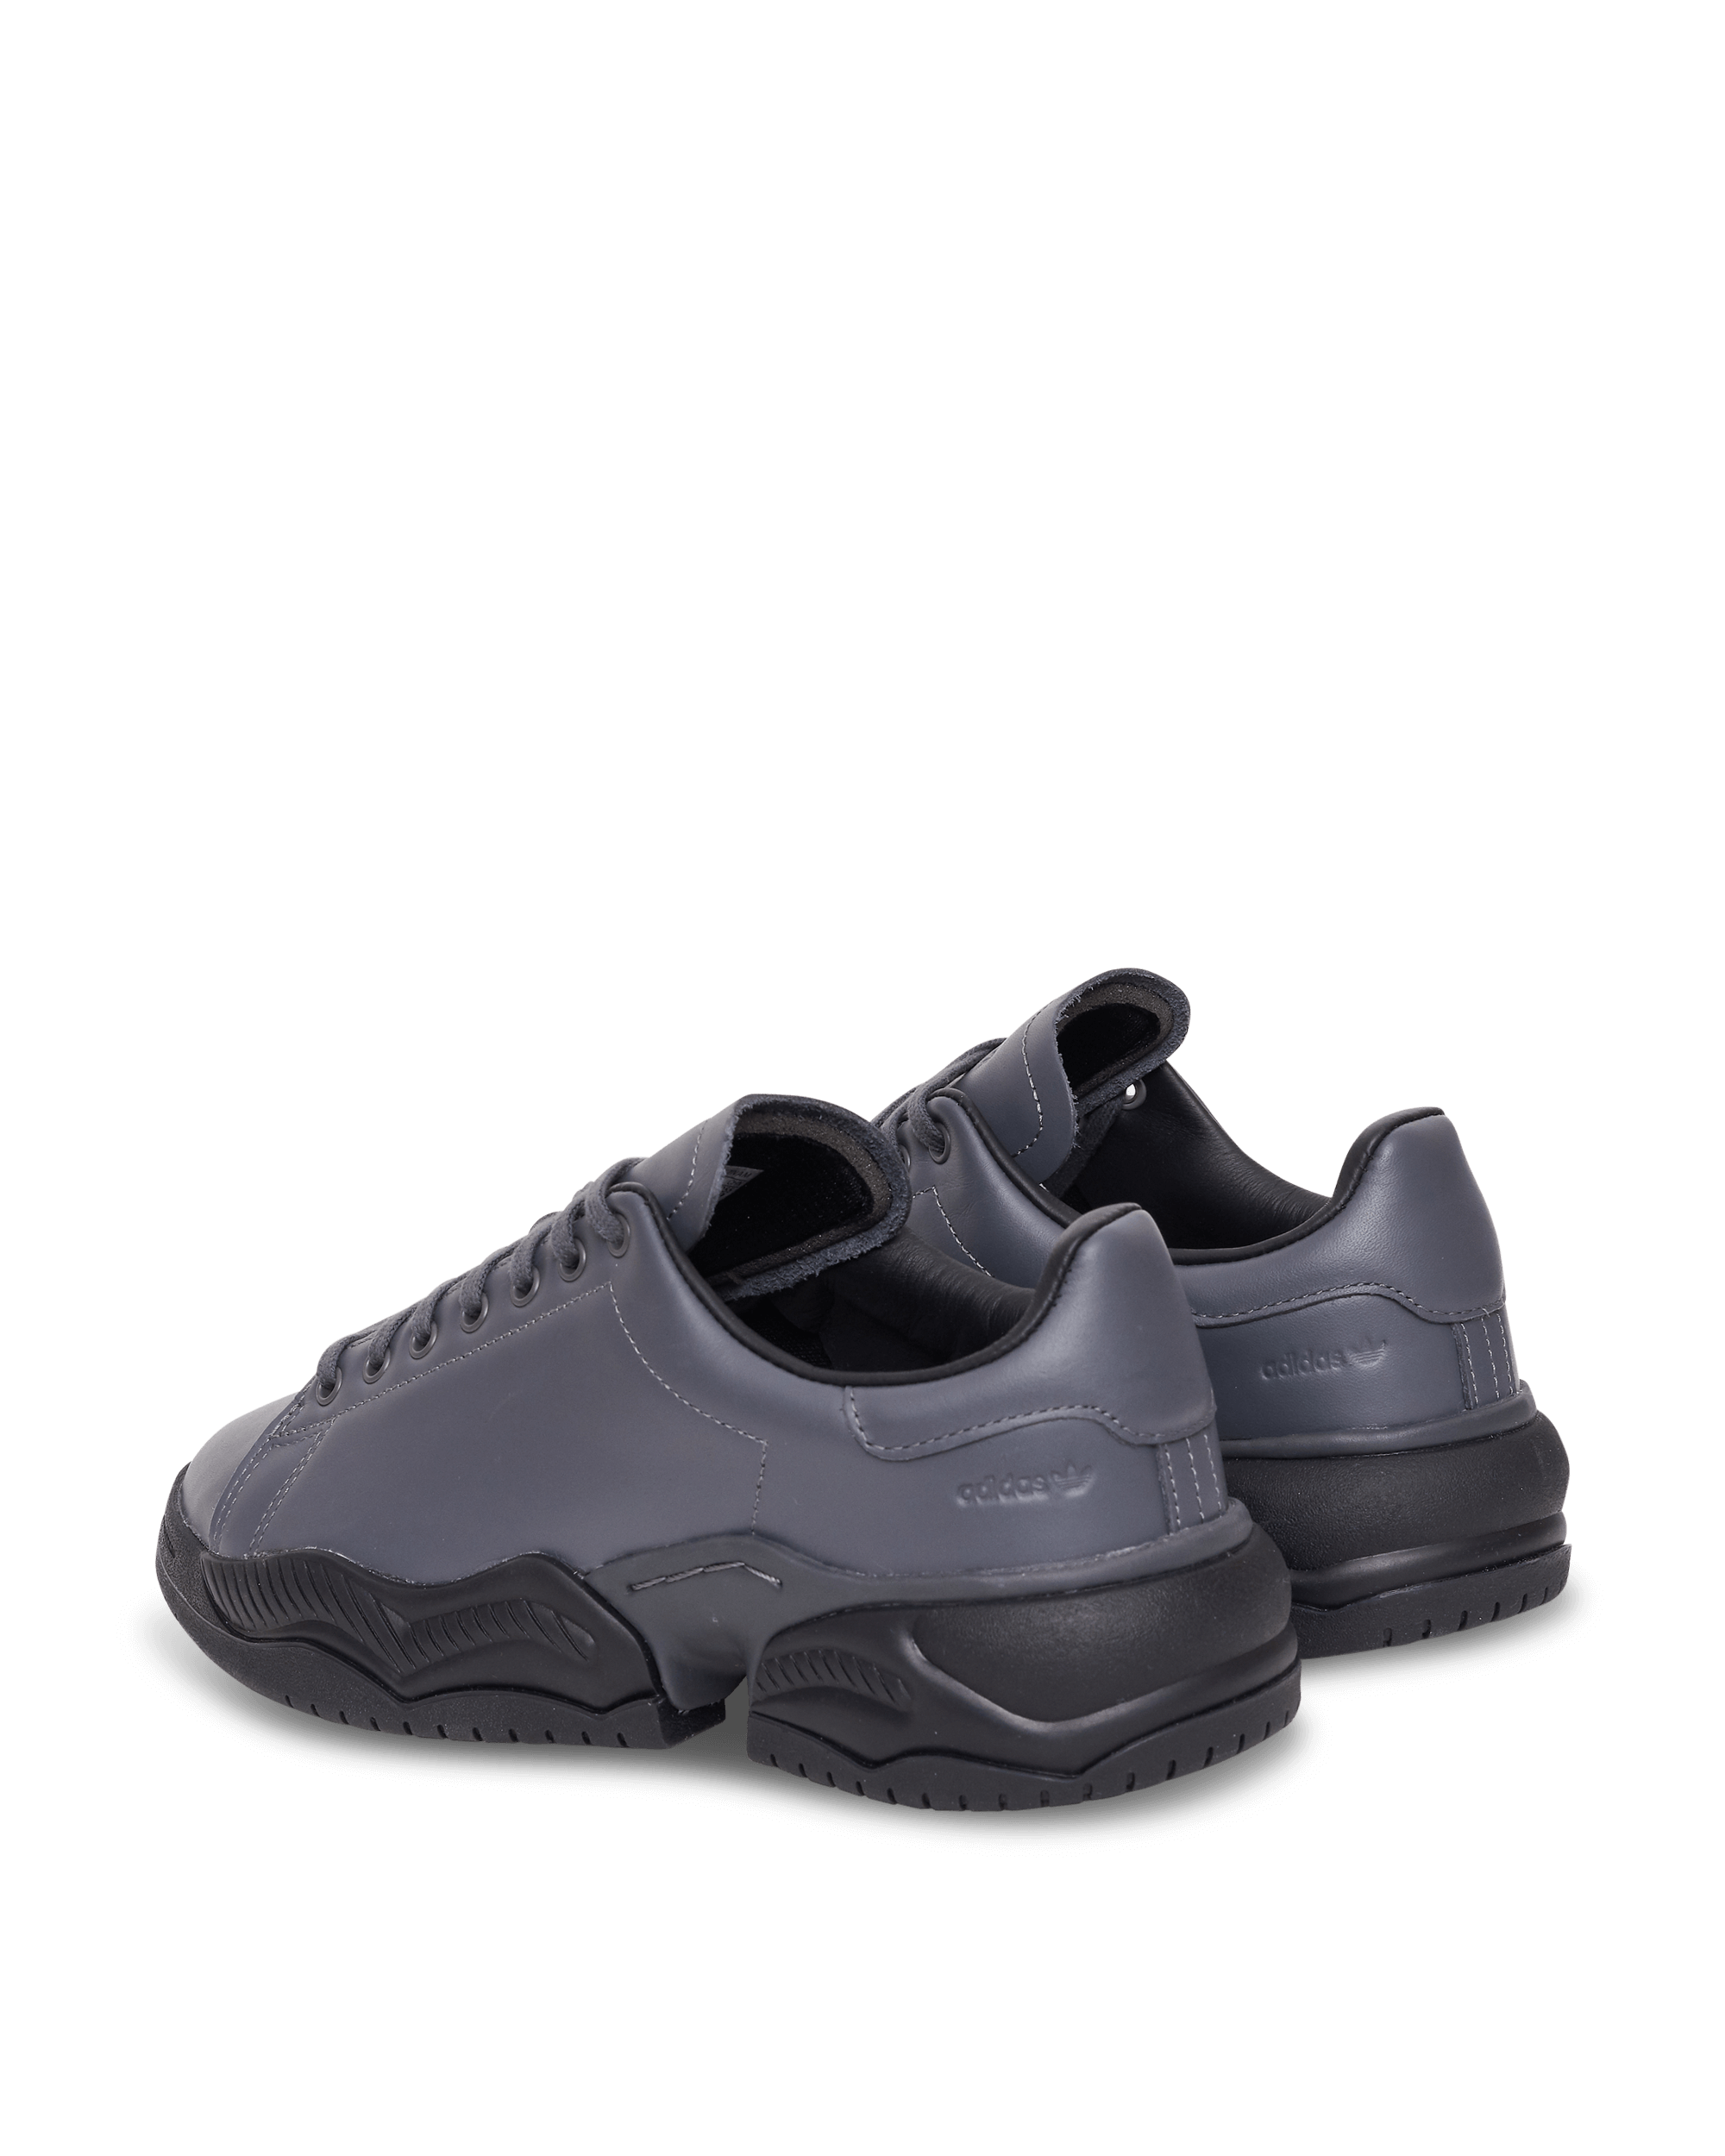 adidas X Oamc Type O-2 Grey Five/Core Black Sneakers Low FV7114 001